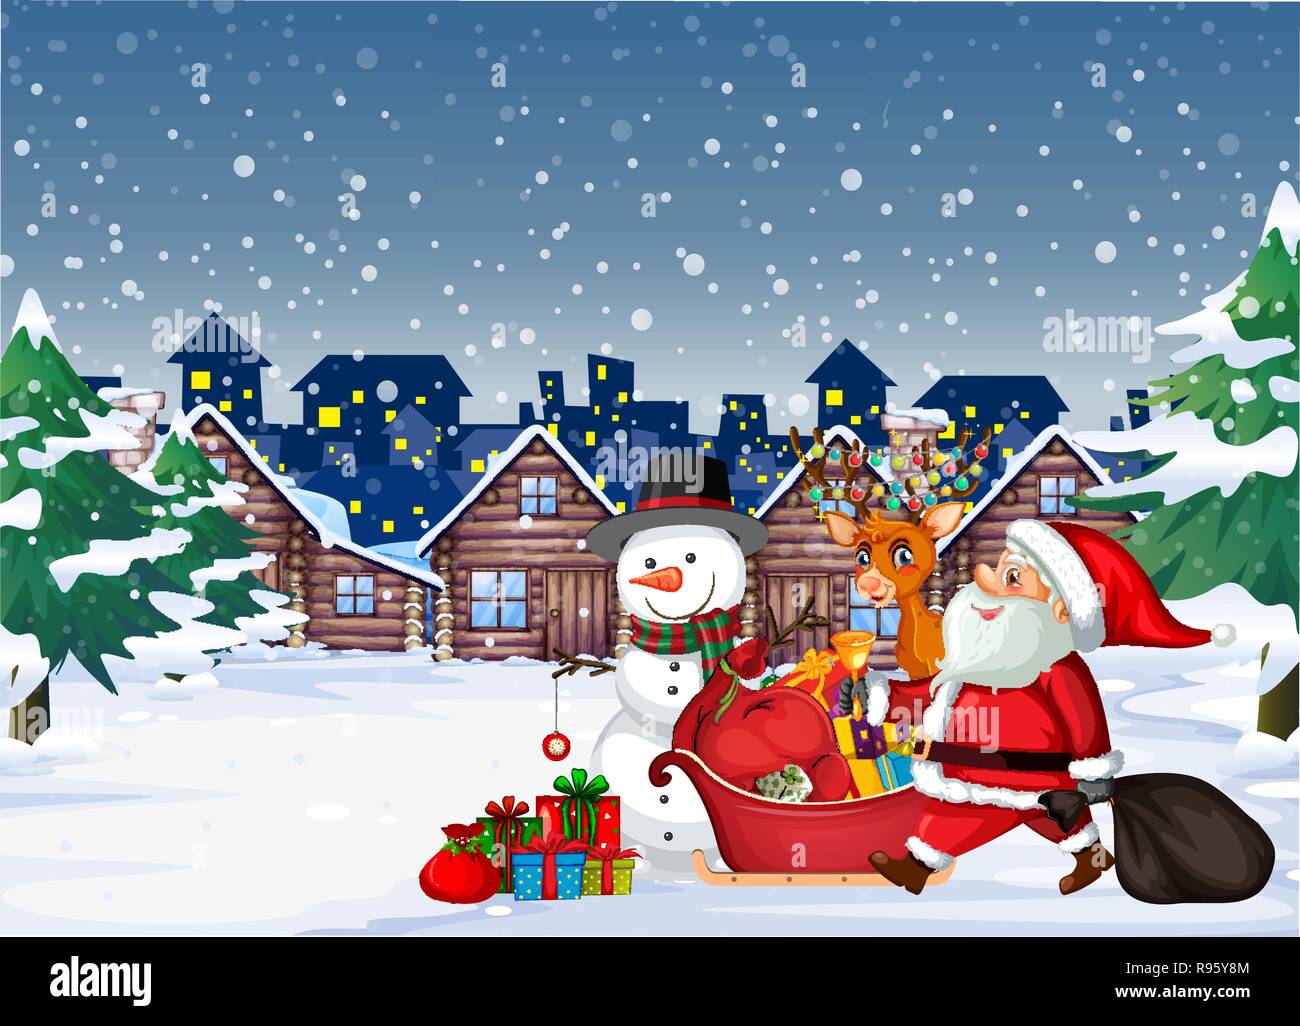 Santa coming to town illustration Stock Vector Image & Art - Alamy